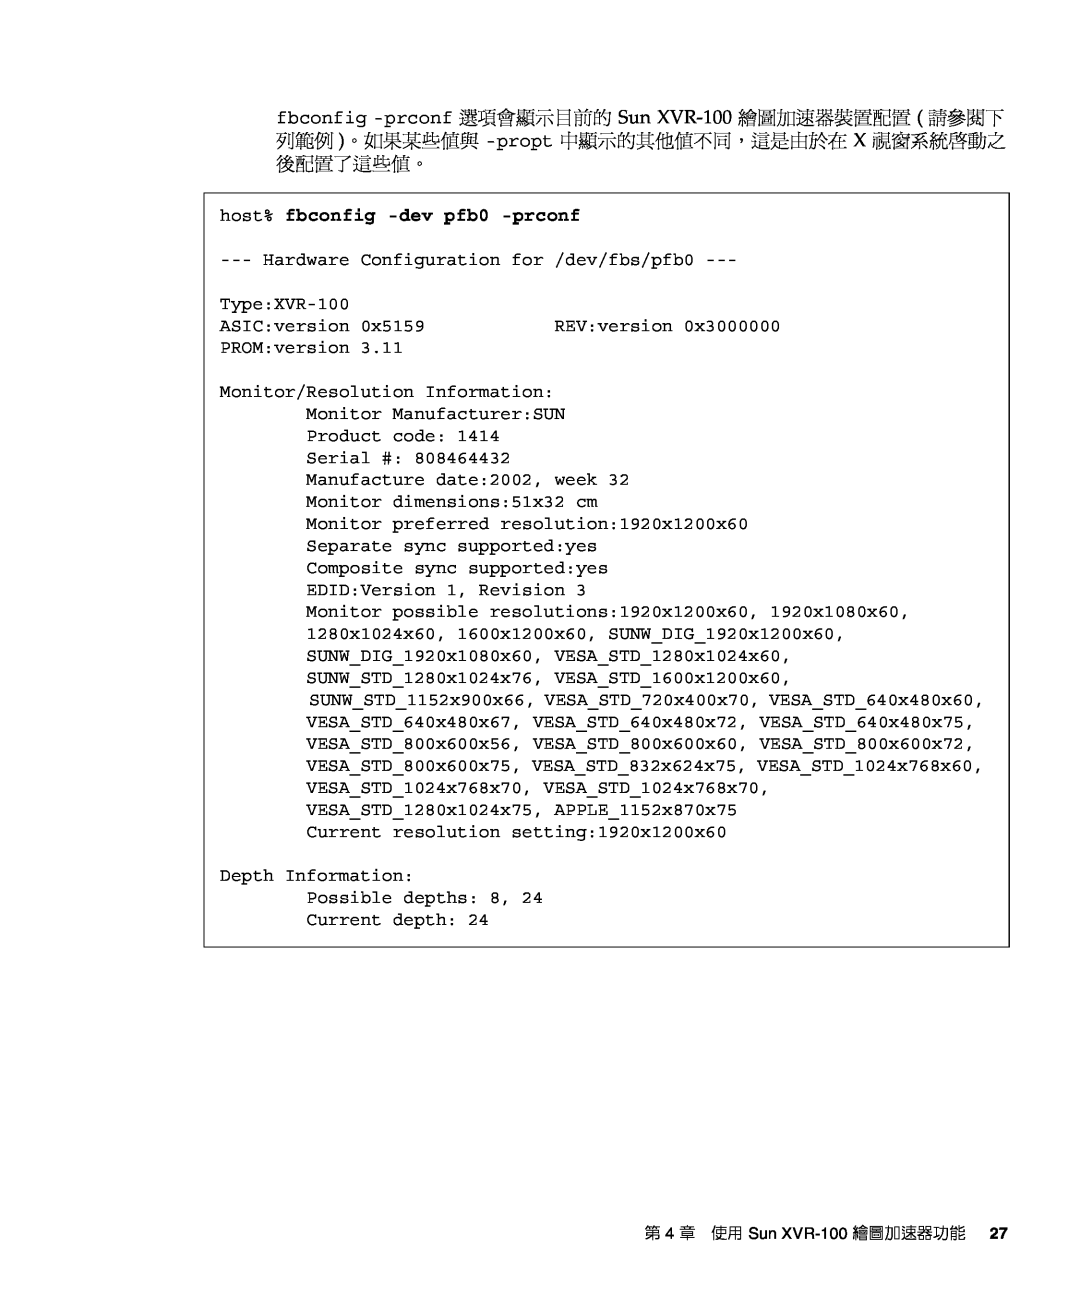 Sun Microsystems XVR-100 manual host% fbconfig -dev pfb0 -prconf 